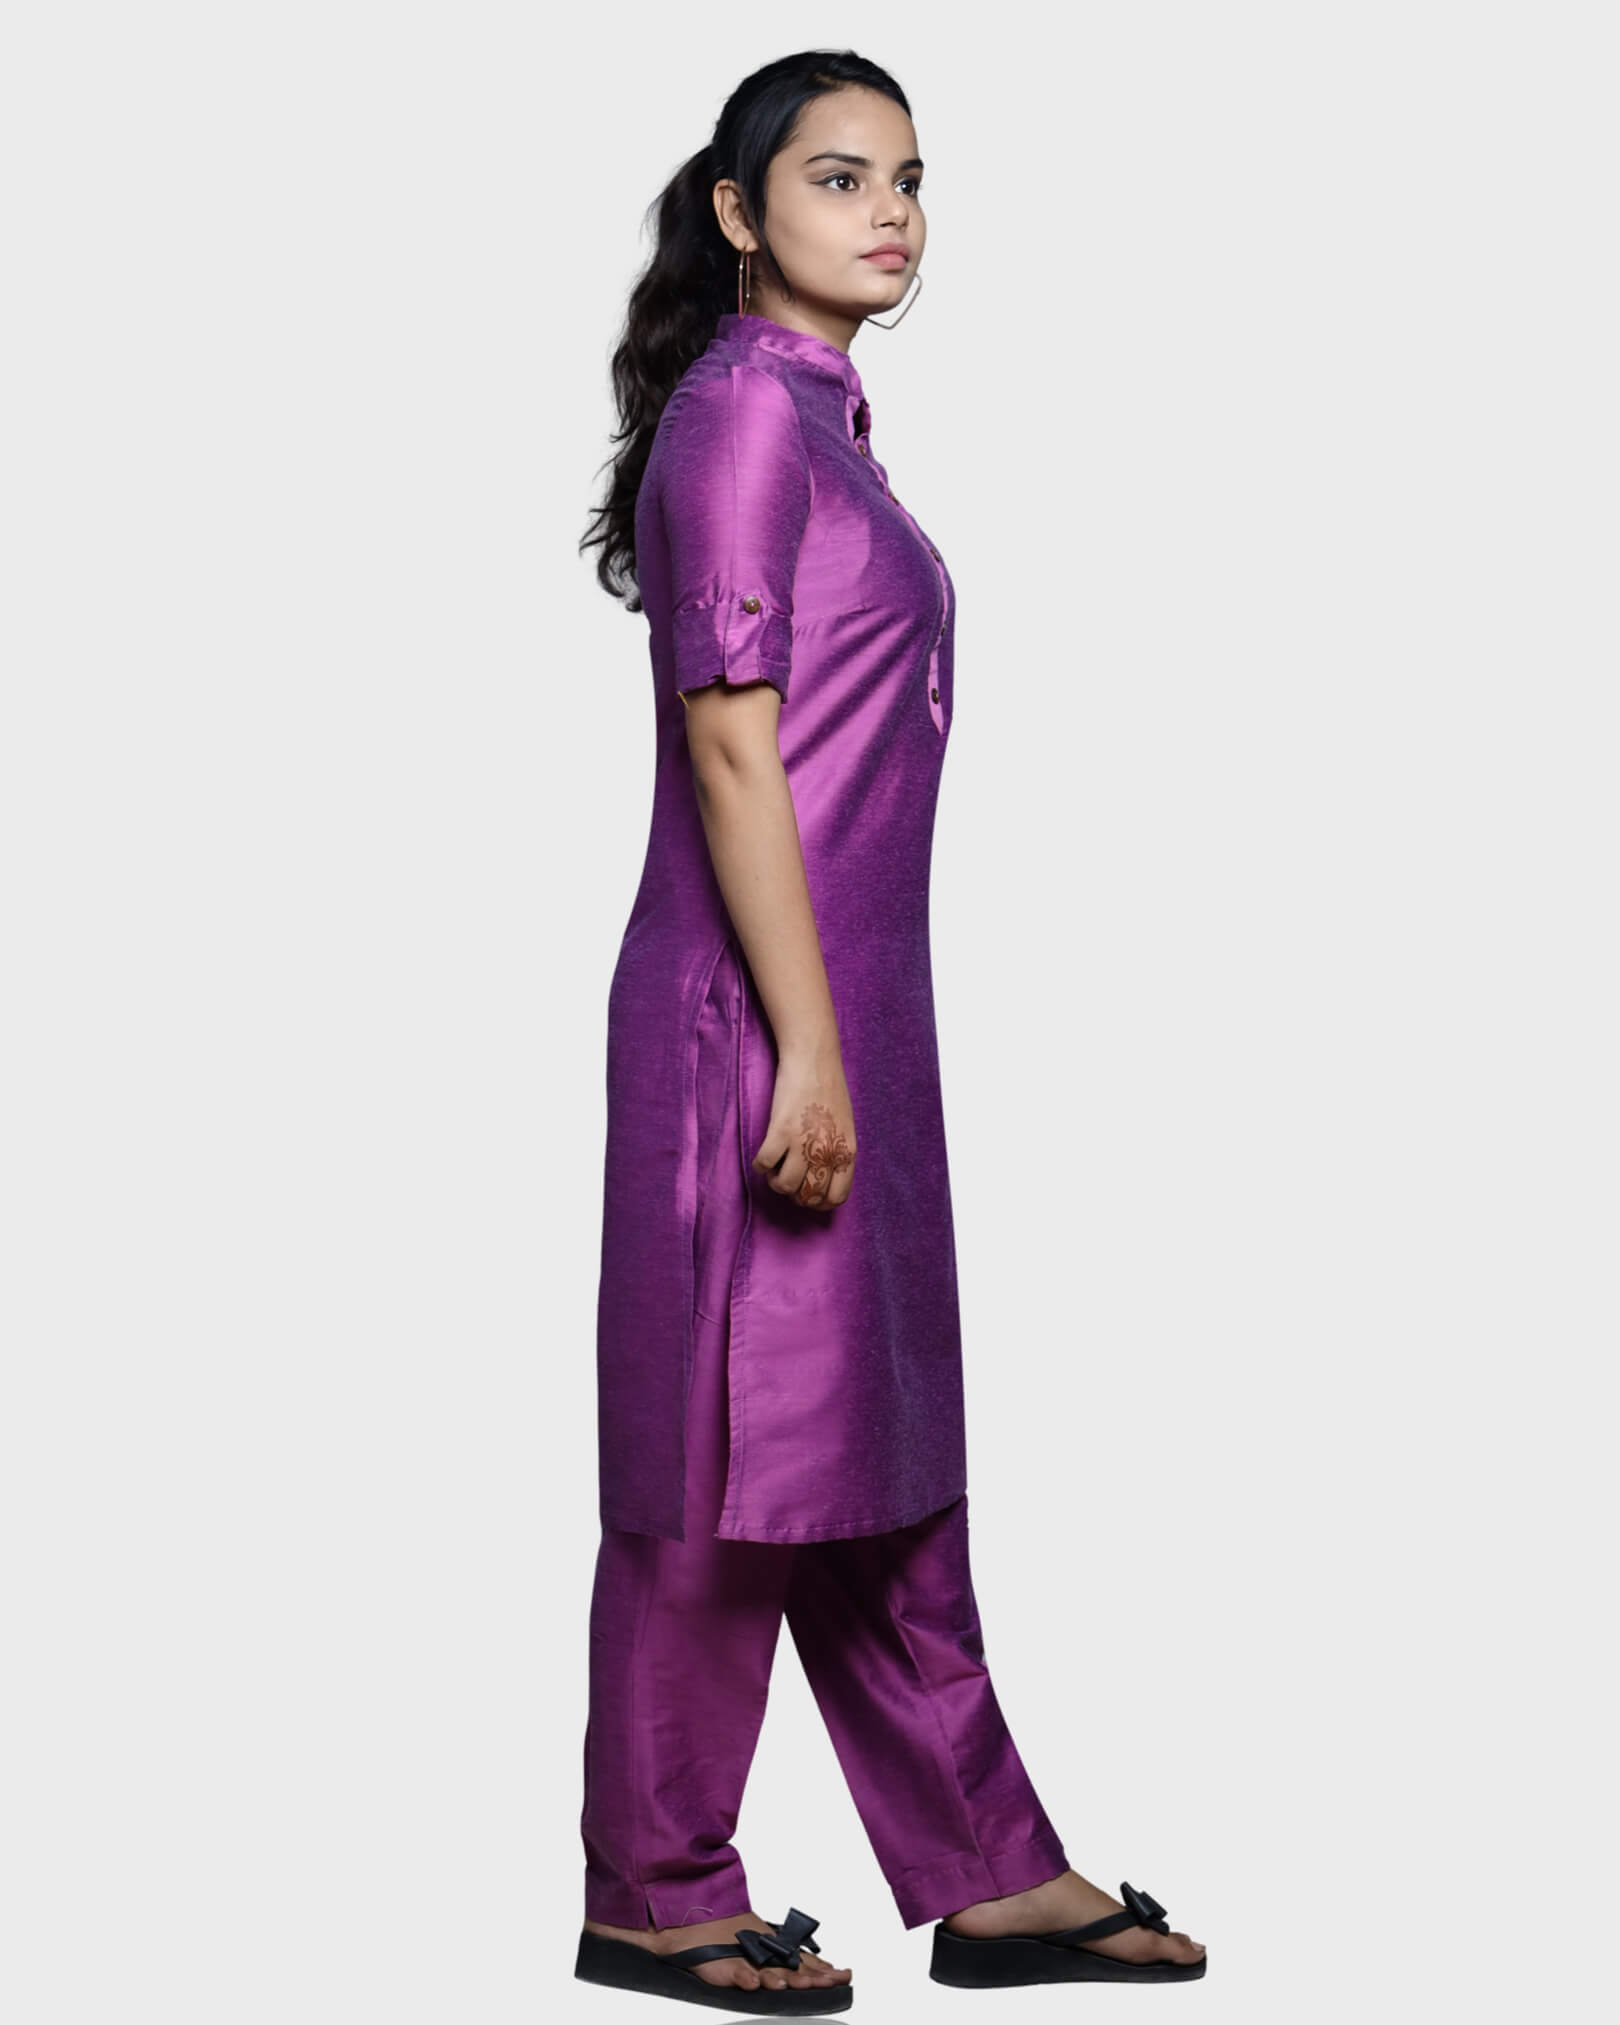 Silkfab Women's Banarasi Silk Magenta Solid Kurti Pant Set - SILKFAB